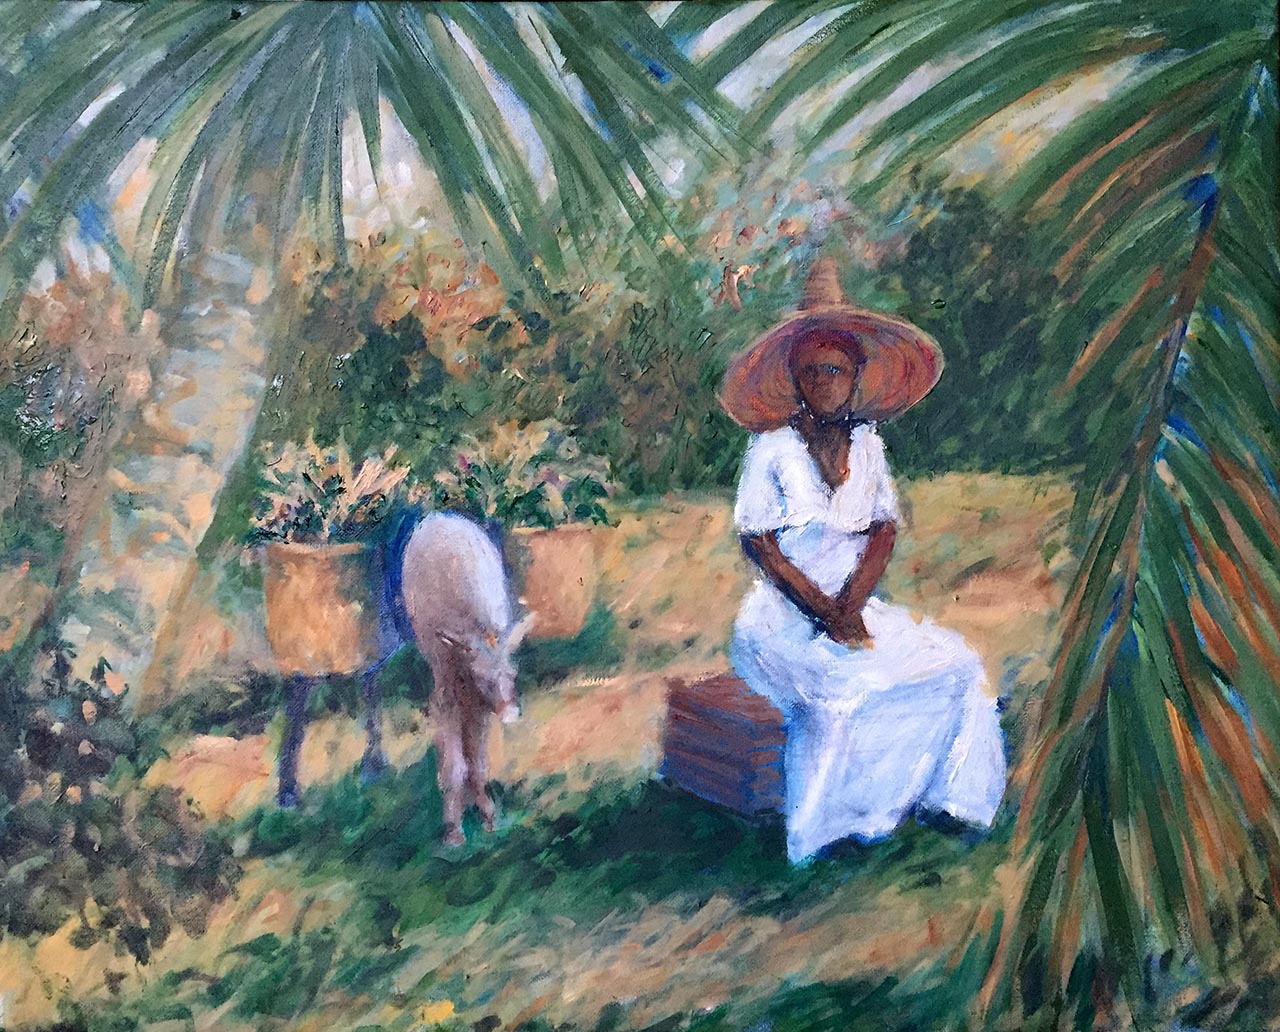 Rest stop - Brian M. Johnston - North american impressionist artist - 16" x 20" - oil on canvas - US$.1350.